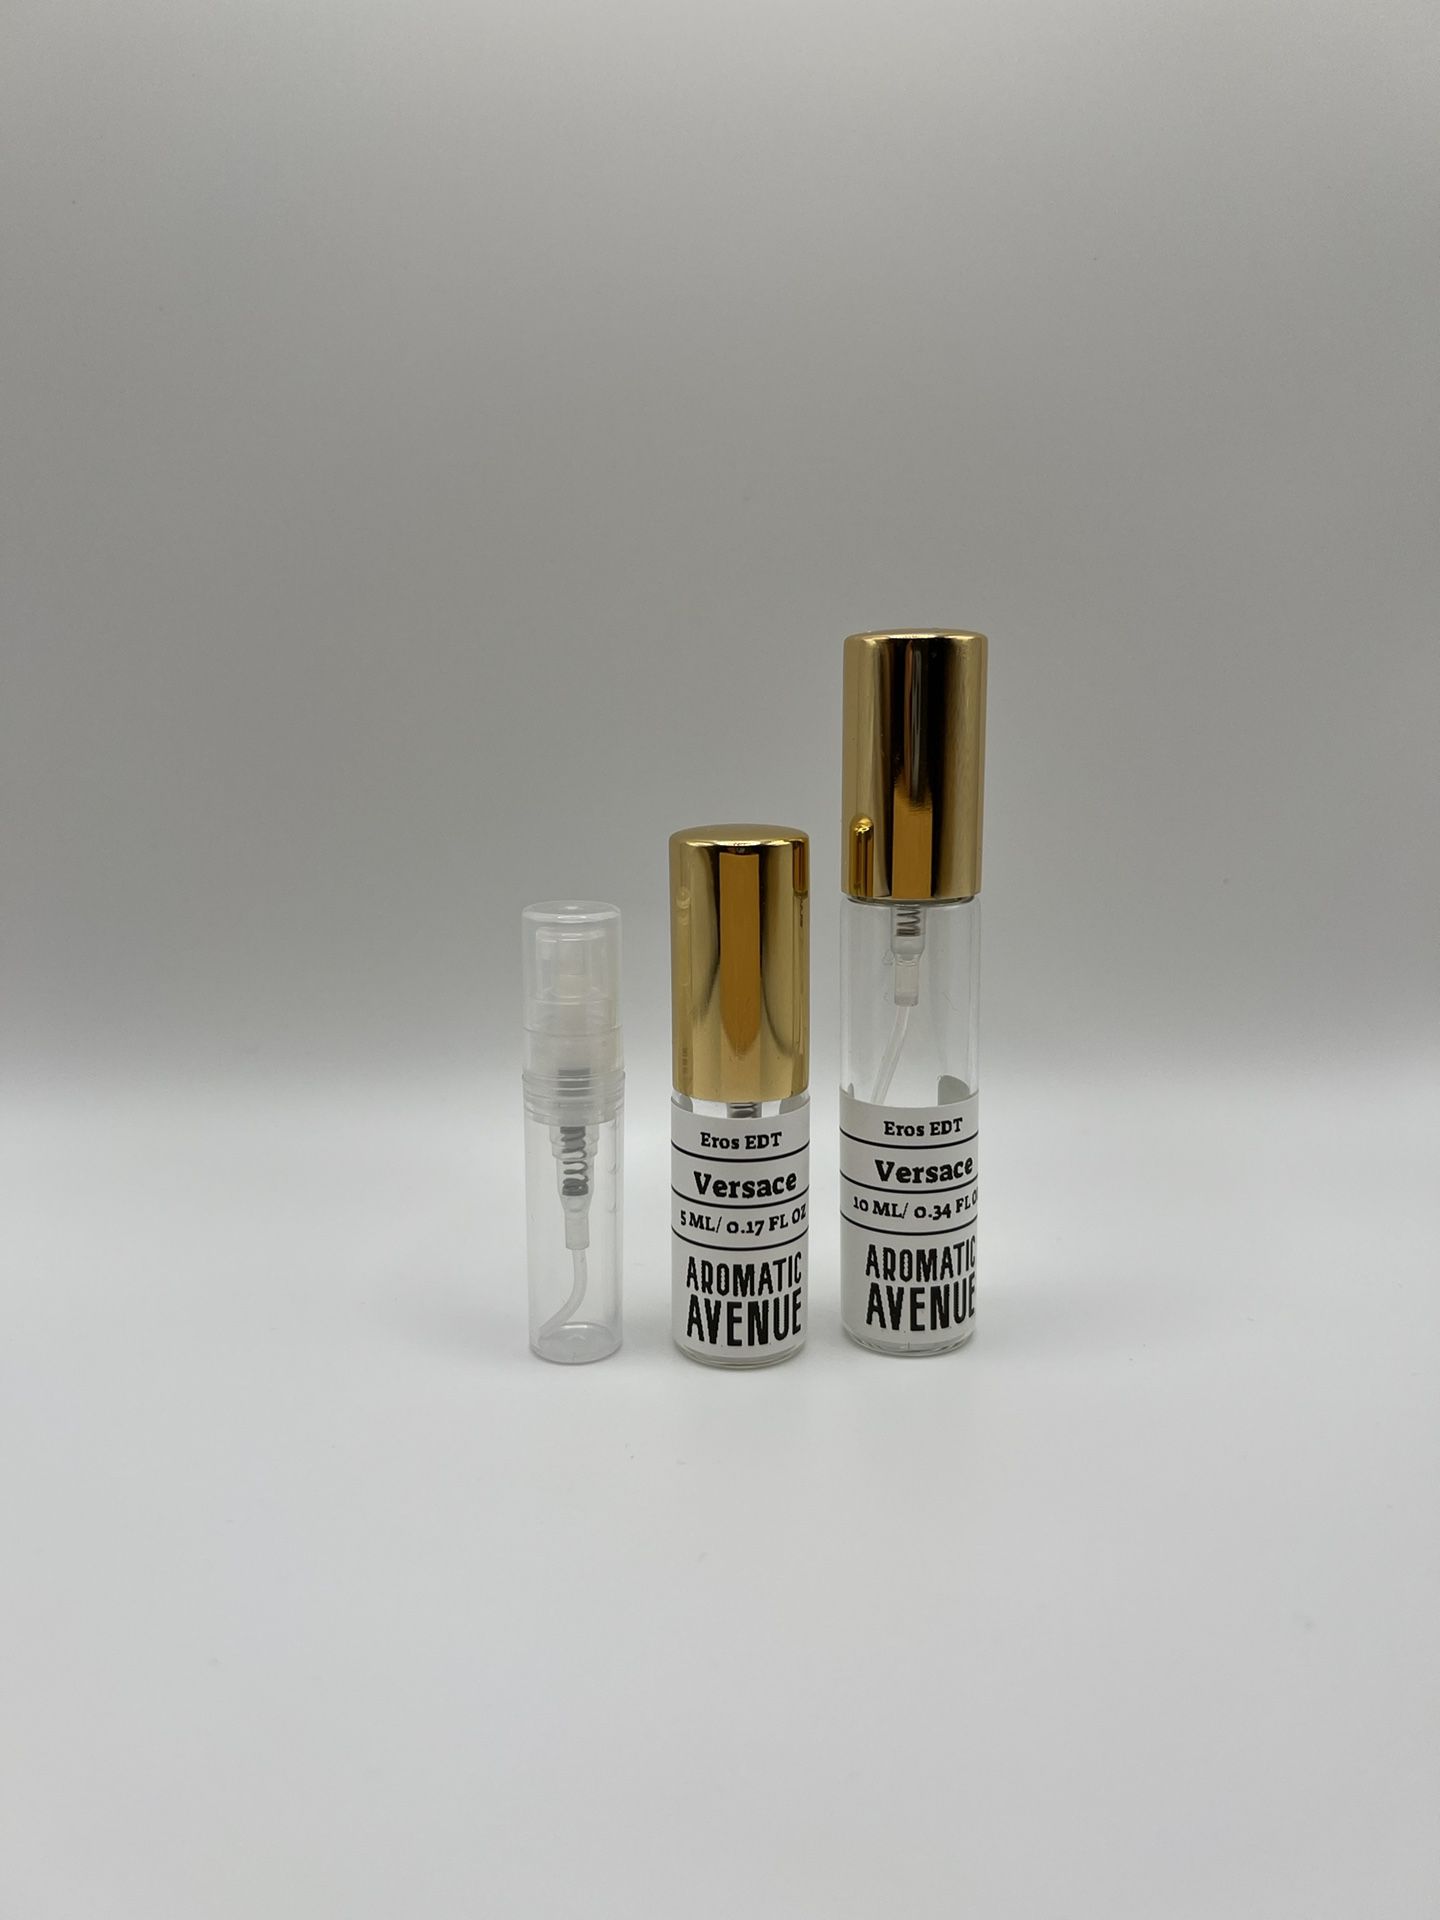 Versace Eros EDT Fragrance Glass Decant Sample Spray Travel Size Vial 10ML